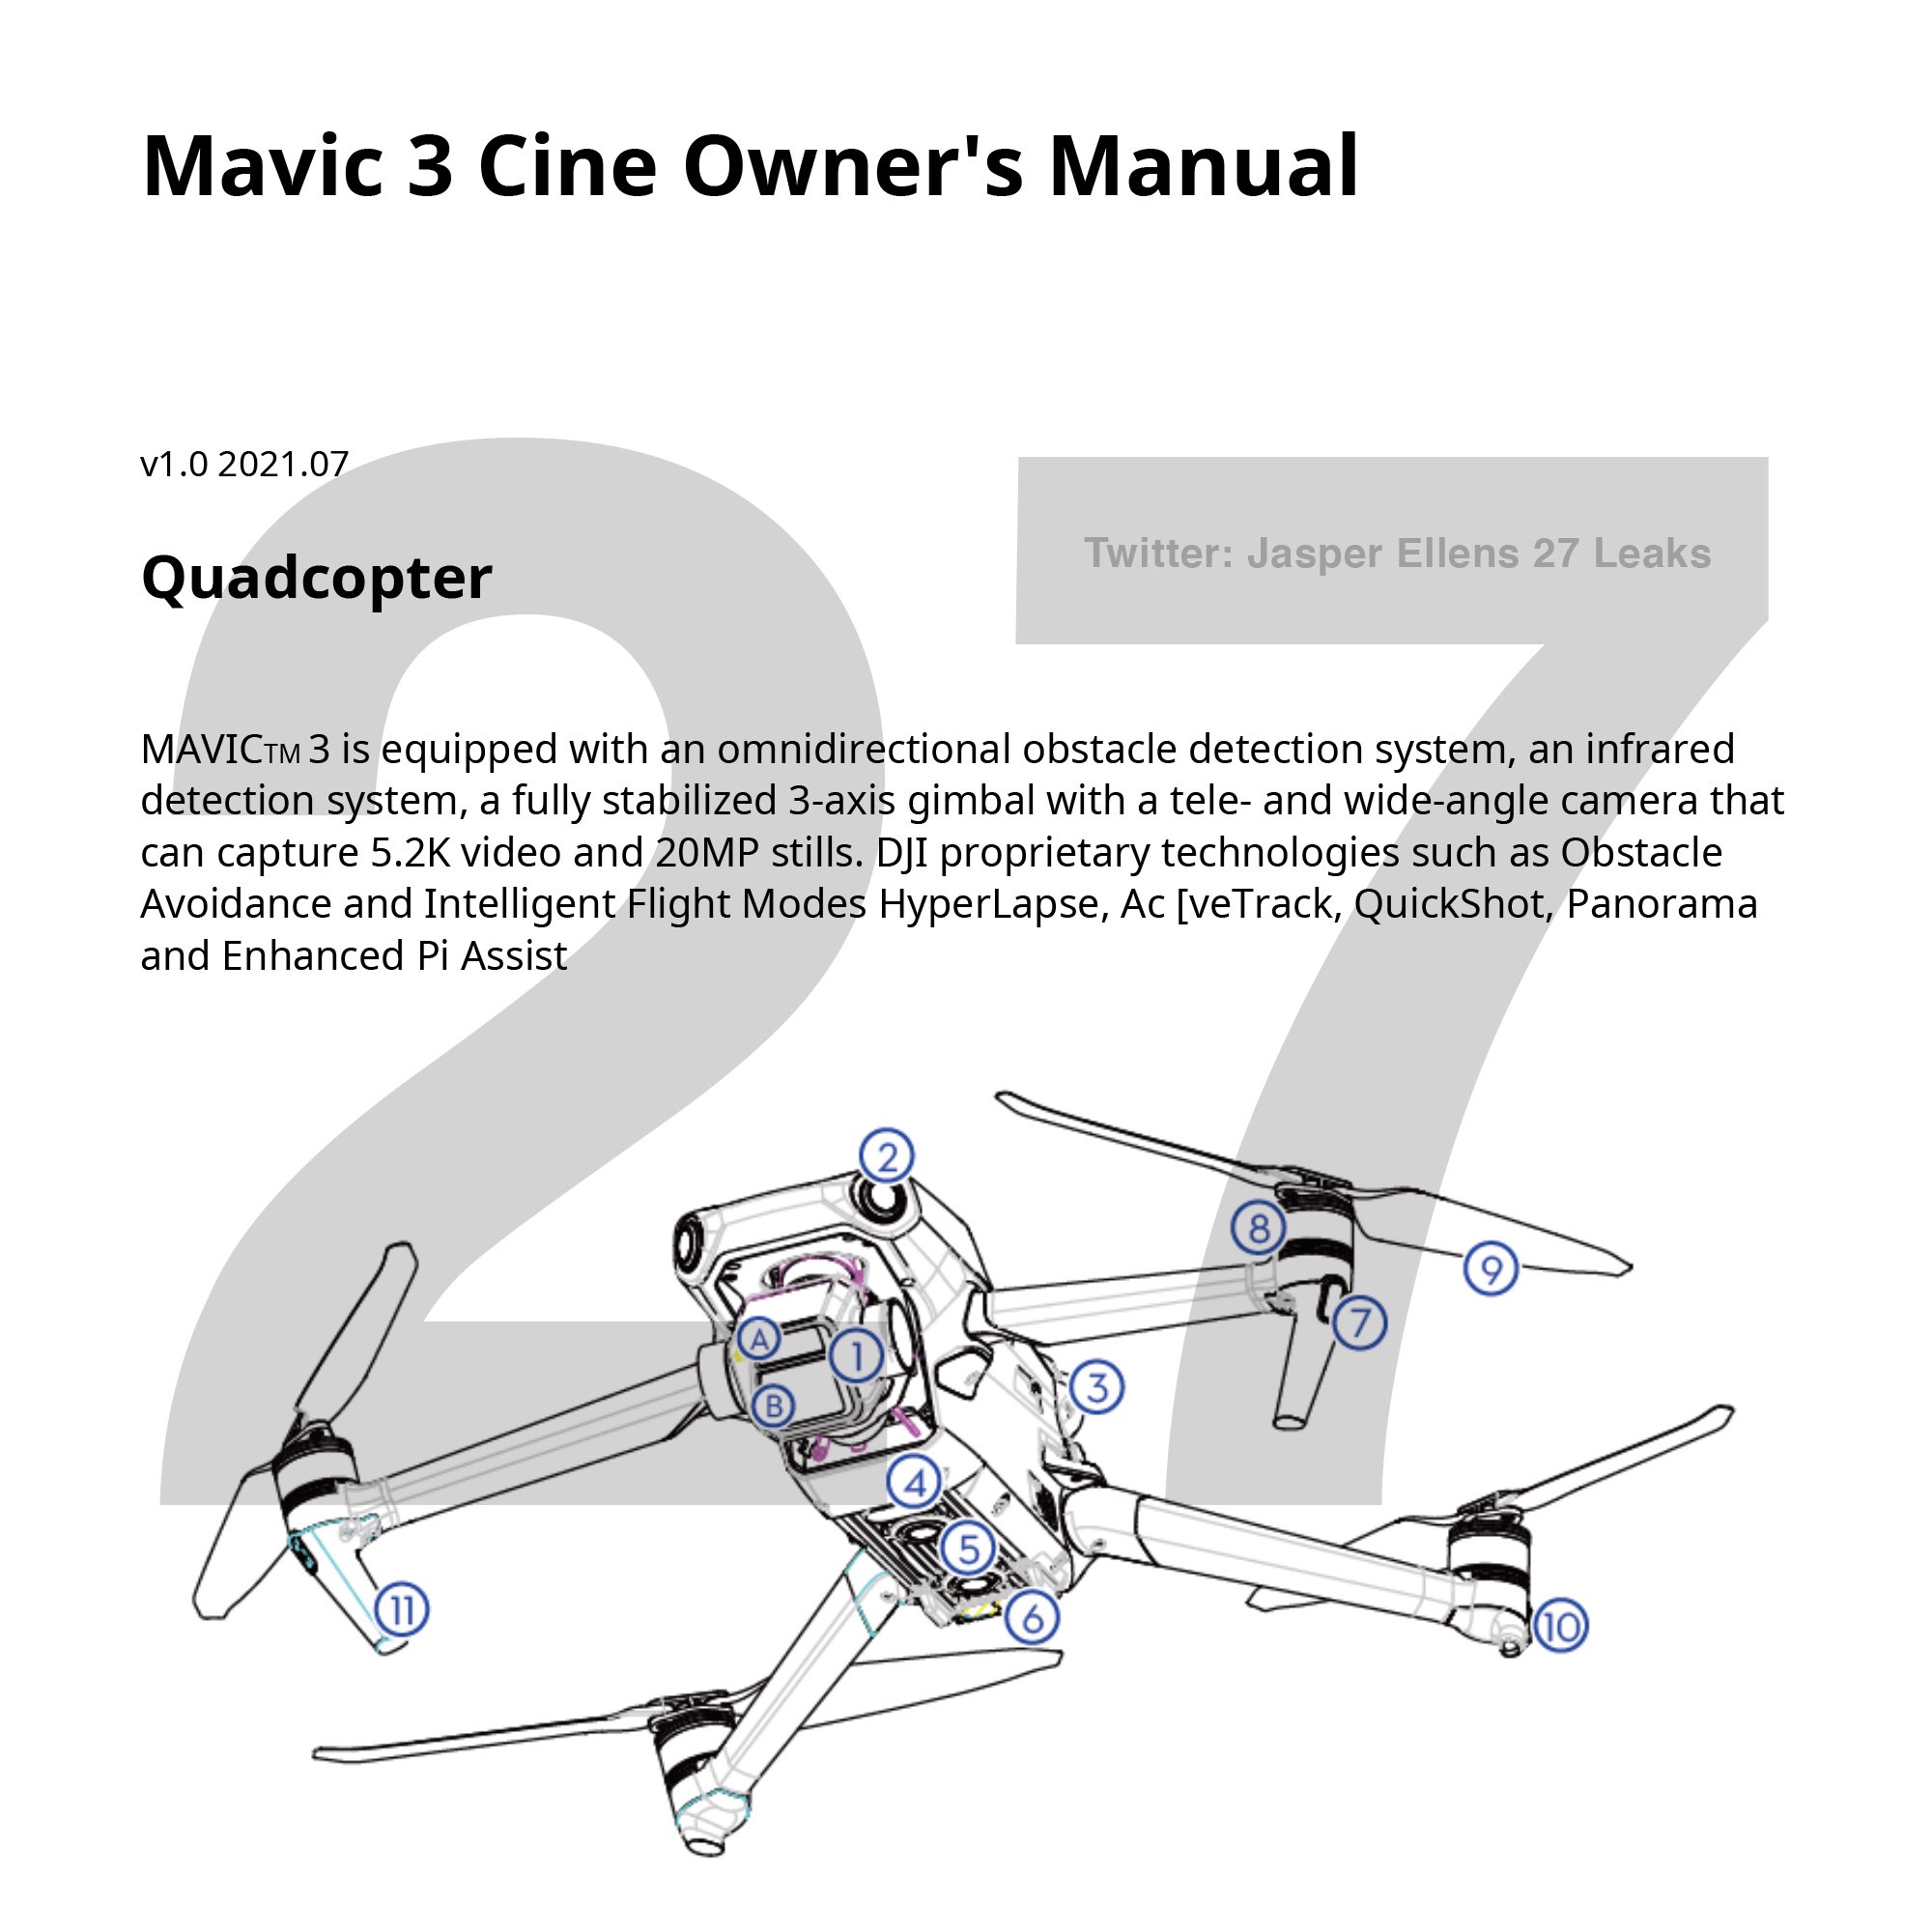 Jasper Ellens | DJI Flight Club on Twitter: "#Mavic3 full manual and specs! 1600. Date: 15 November. Smart controller, 15 4/3 inch. @DroneXL1 @geeksvana @dronedj @techdronemedia @DronewatchNL @DronefriendlyB @dronemodelismo @OsitaLV